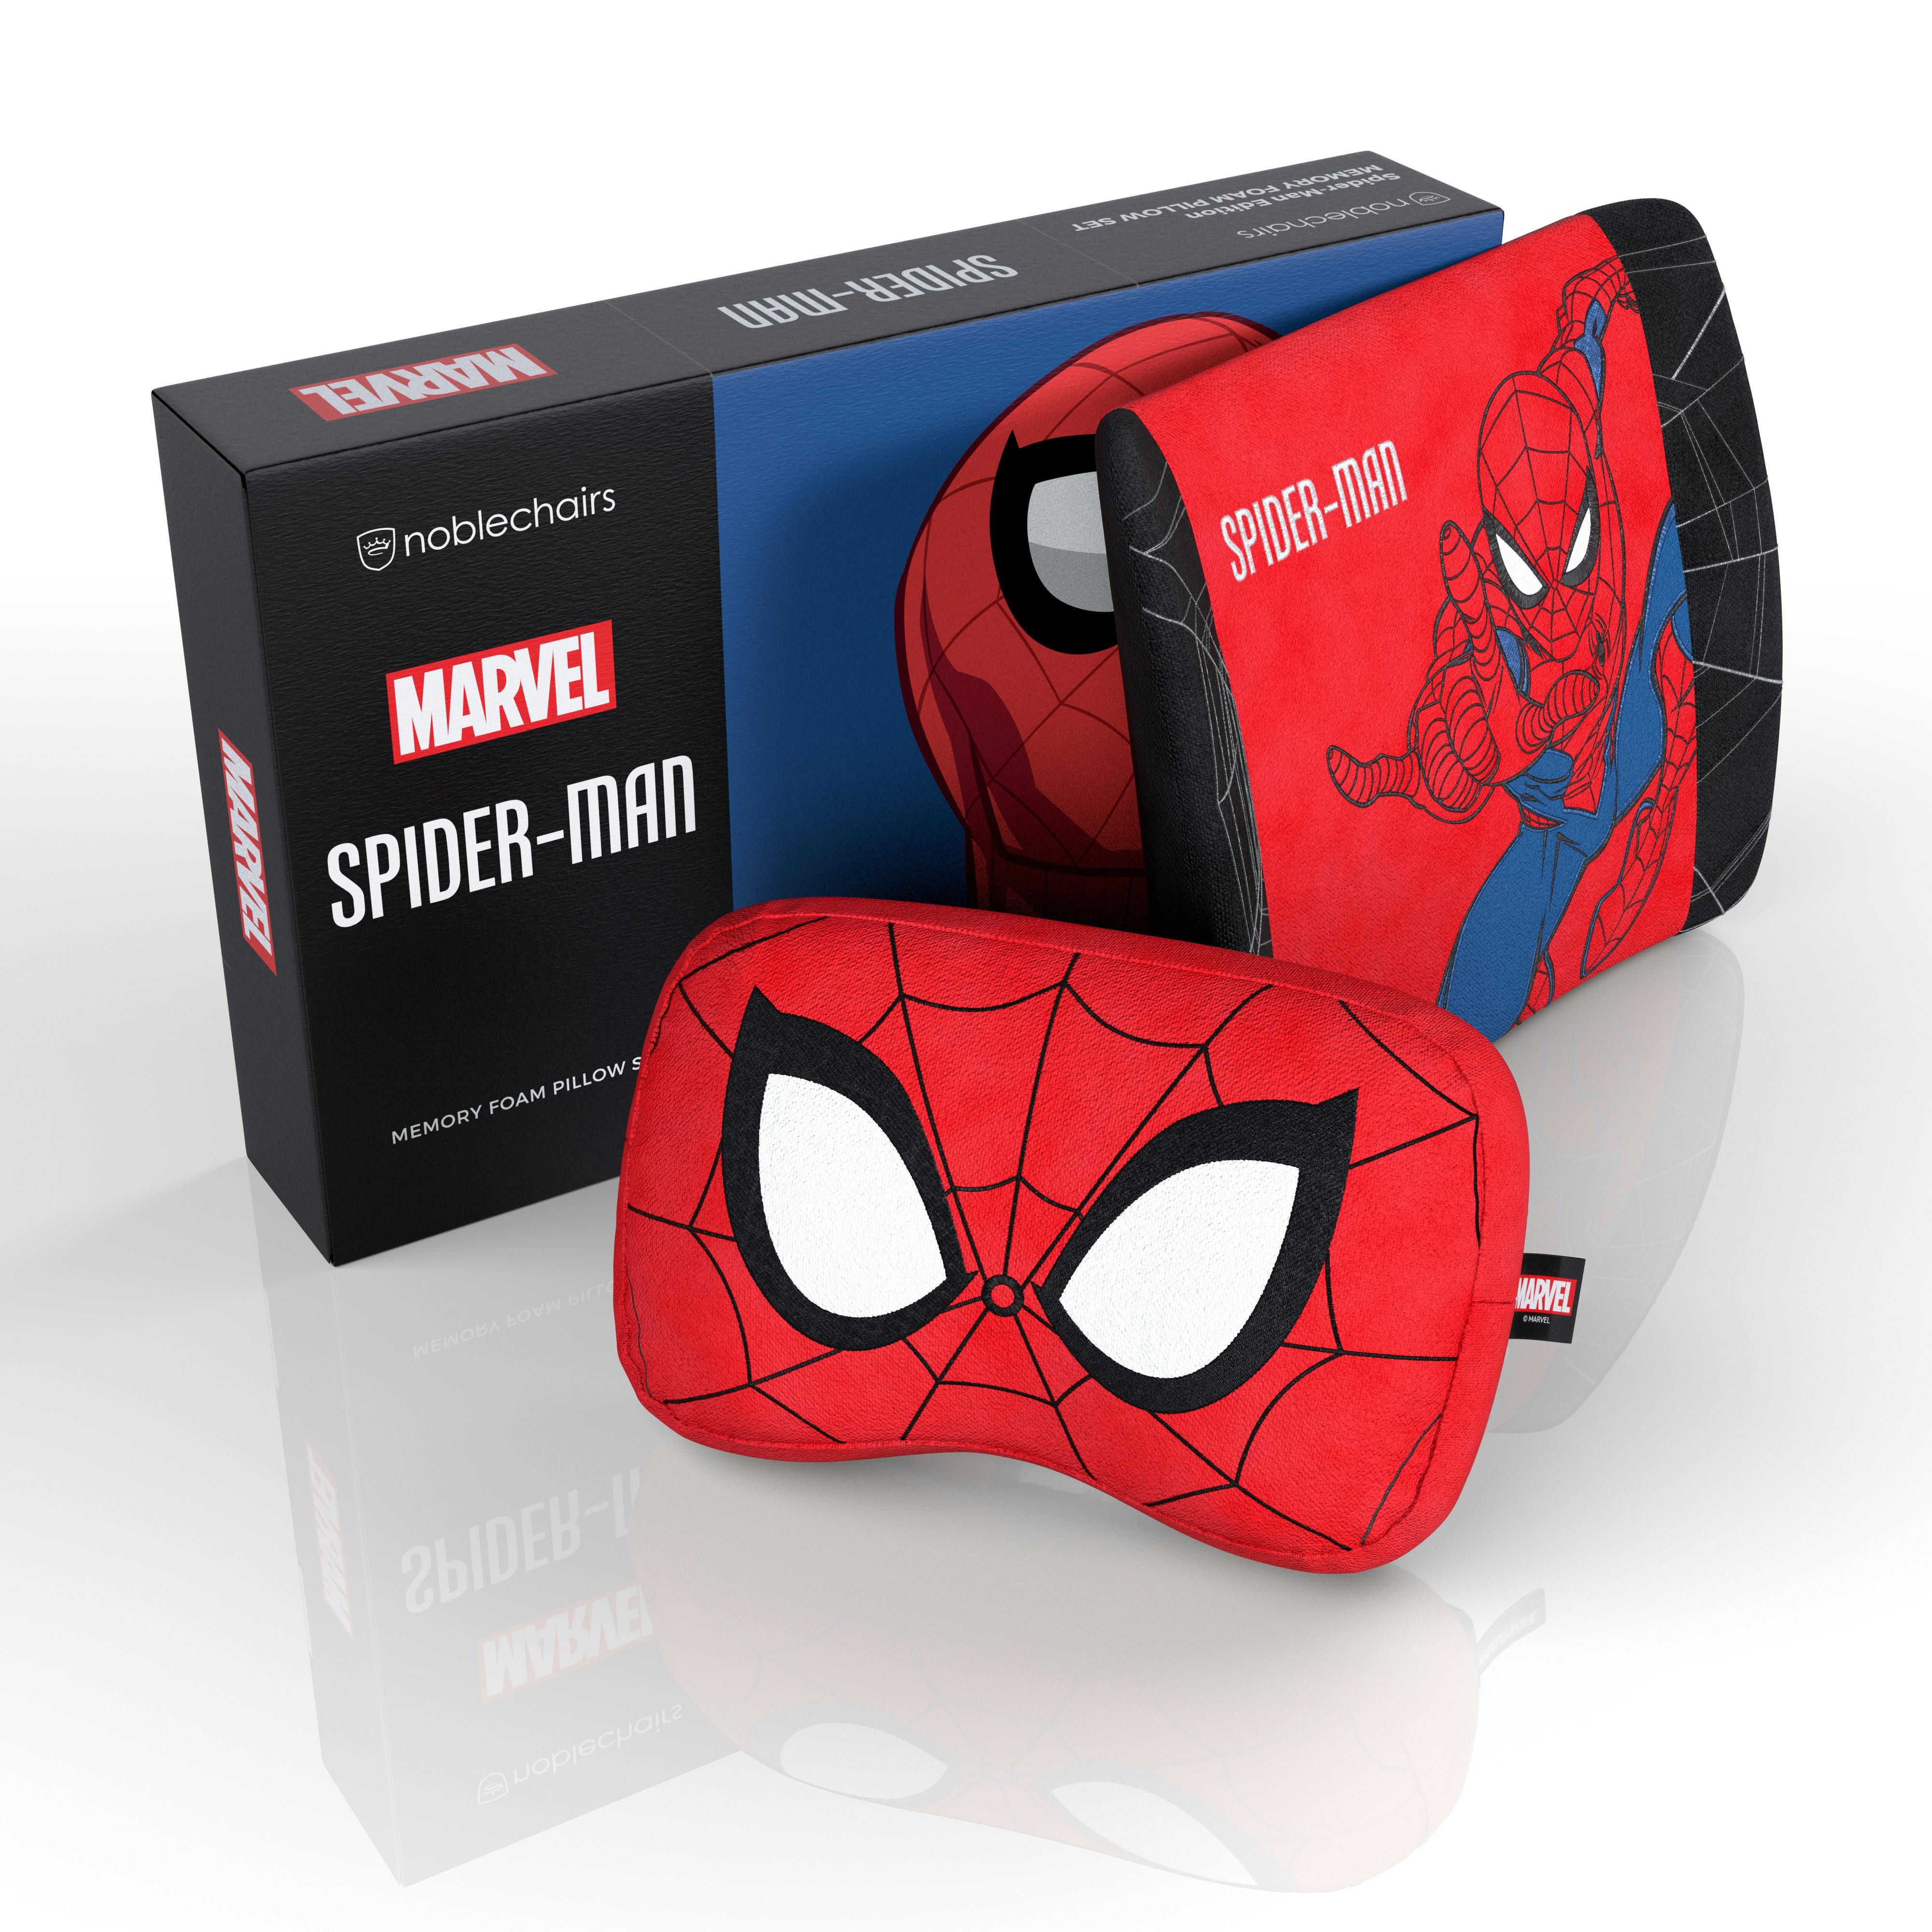  - Memory Foam Pillow Set - Spider-Man Edition